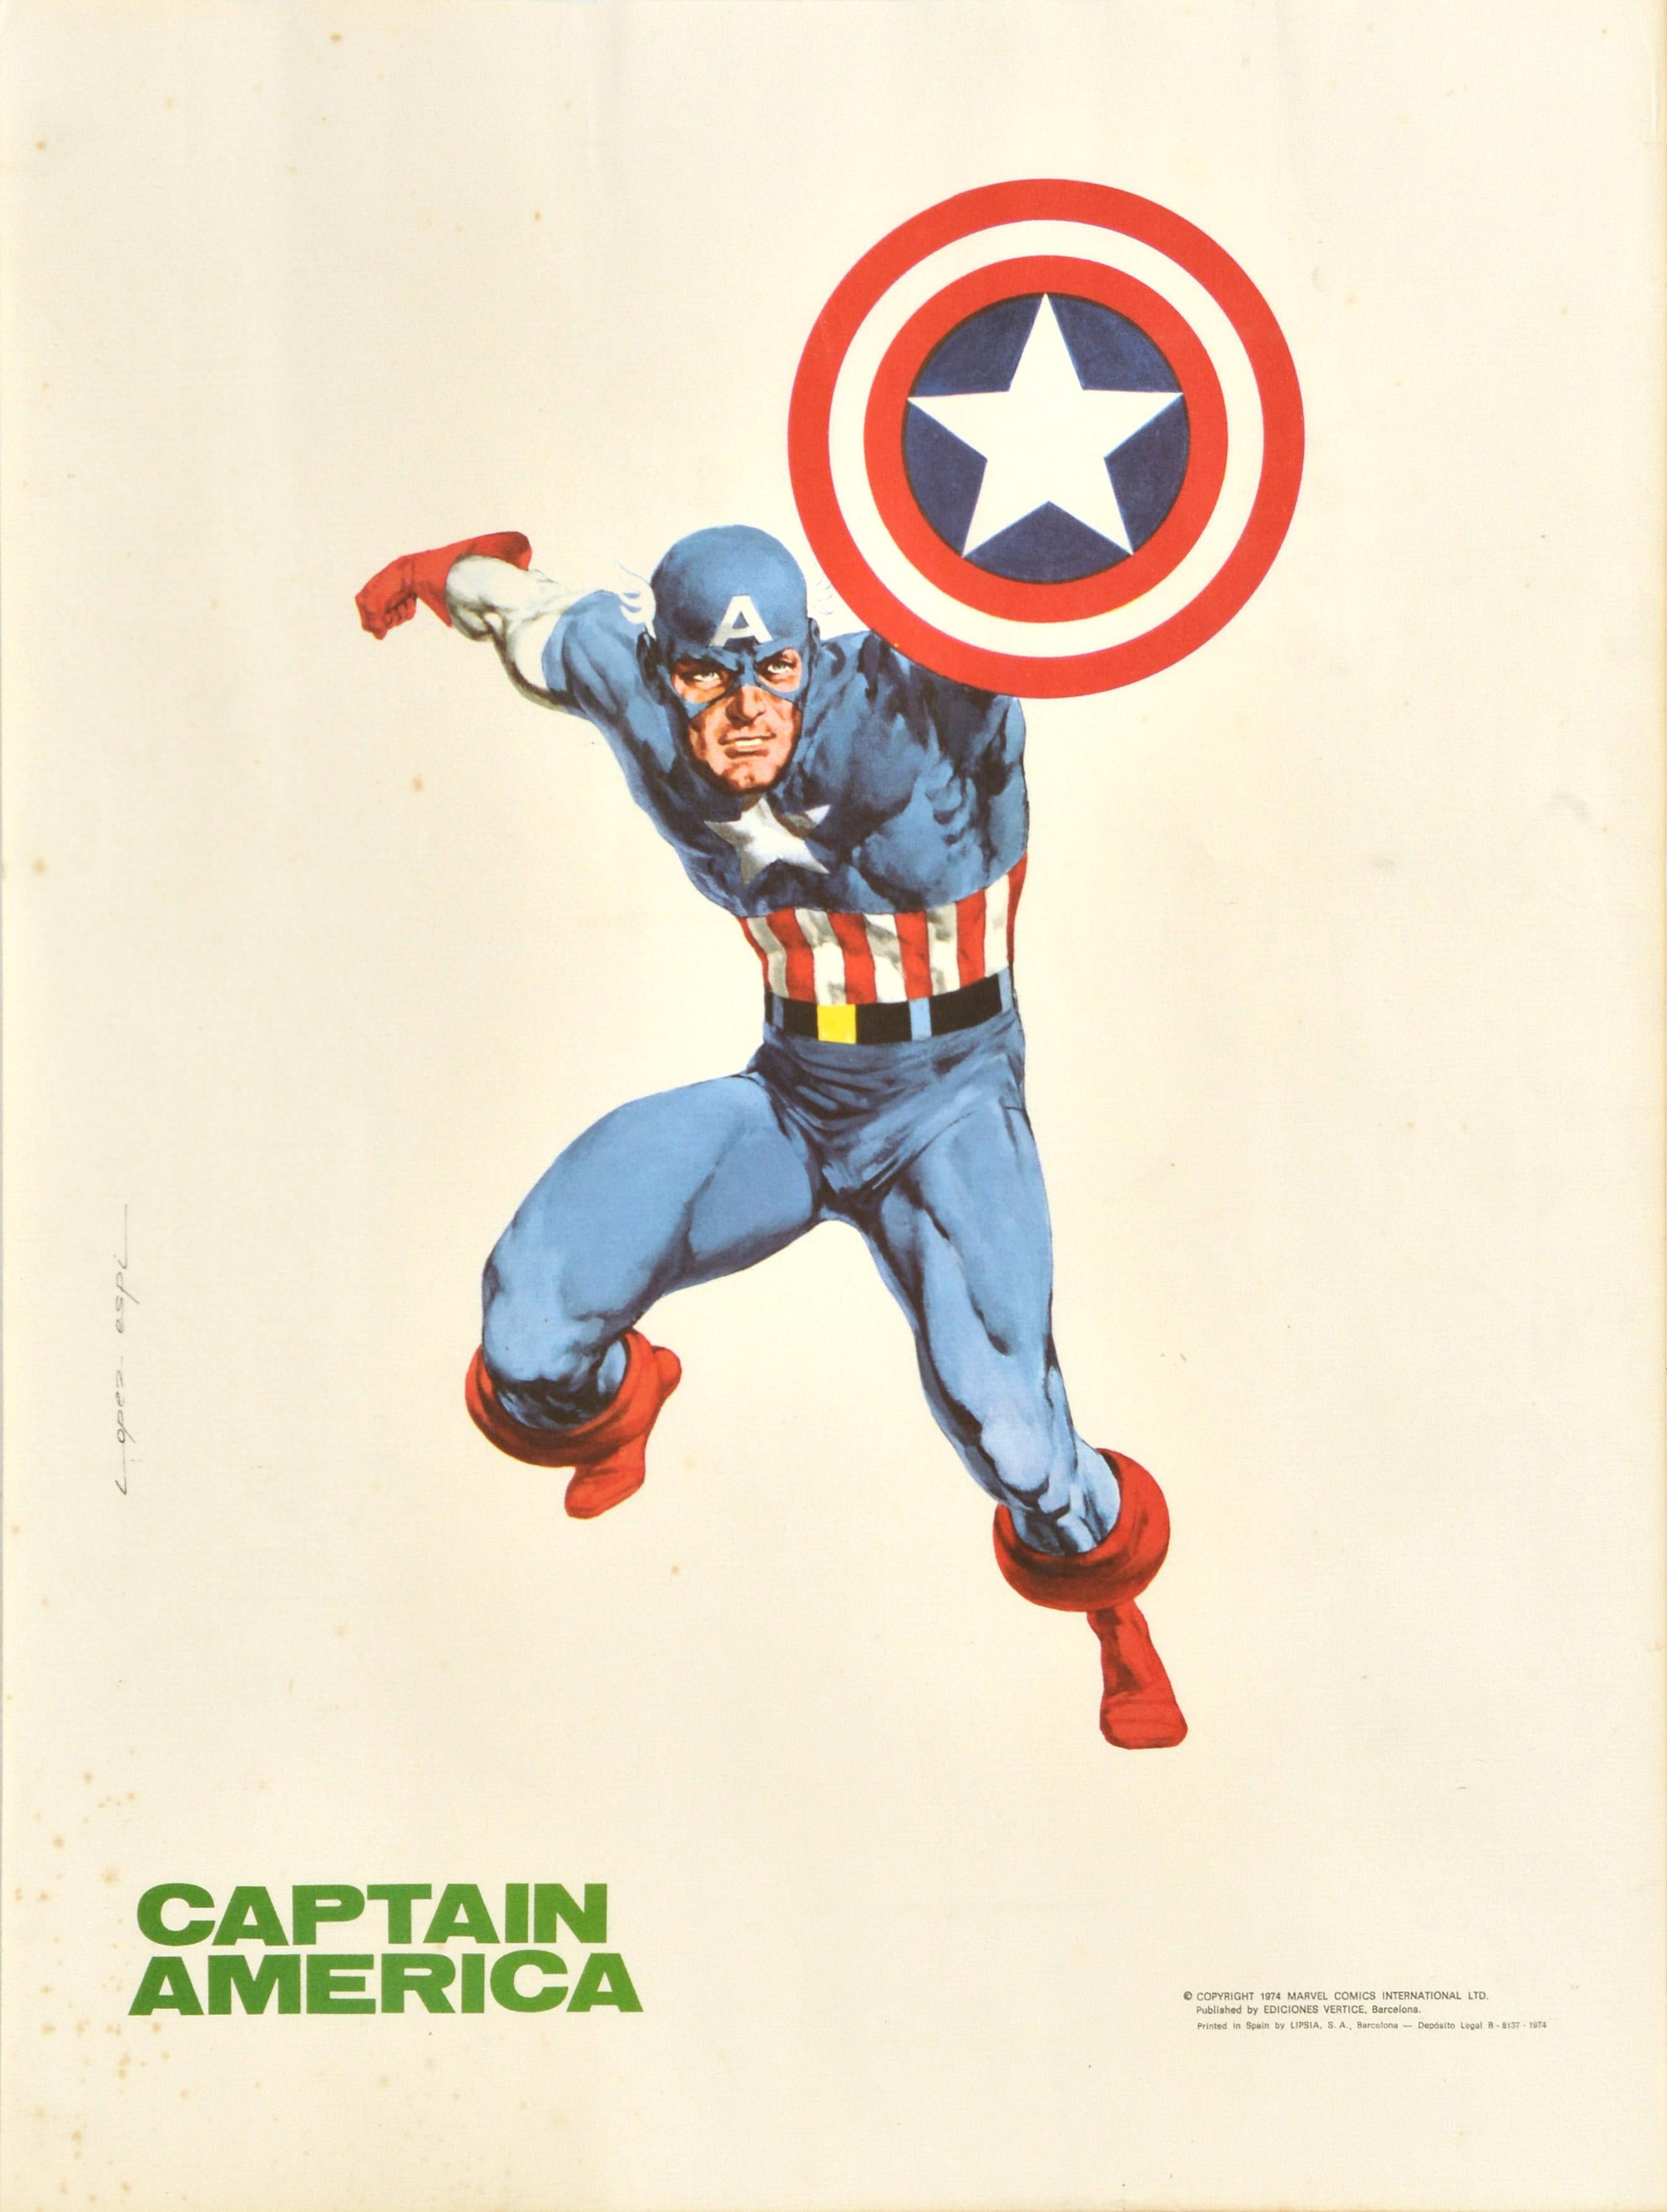 Lopez Espi Print - Original Vintage Marvel Film Poster Captain America Animated Superhero Movie Art